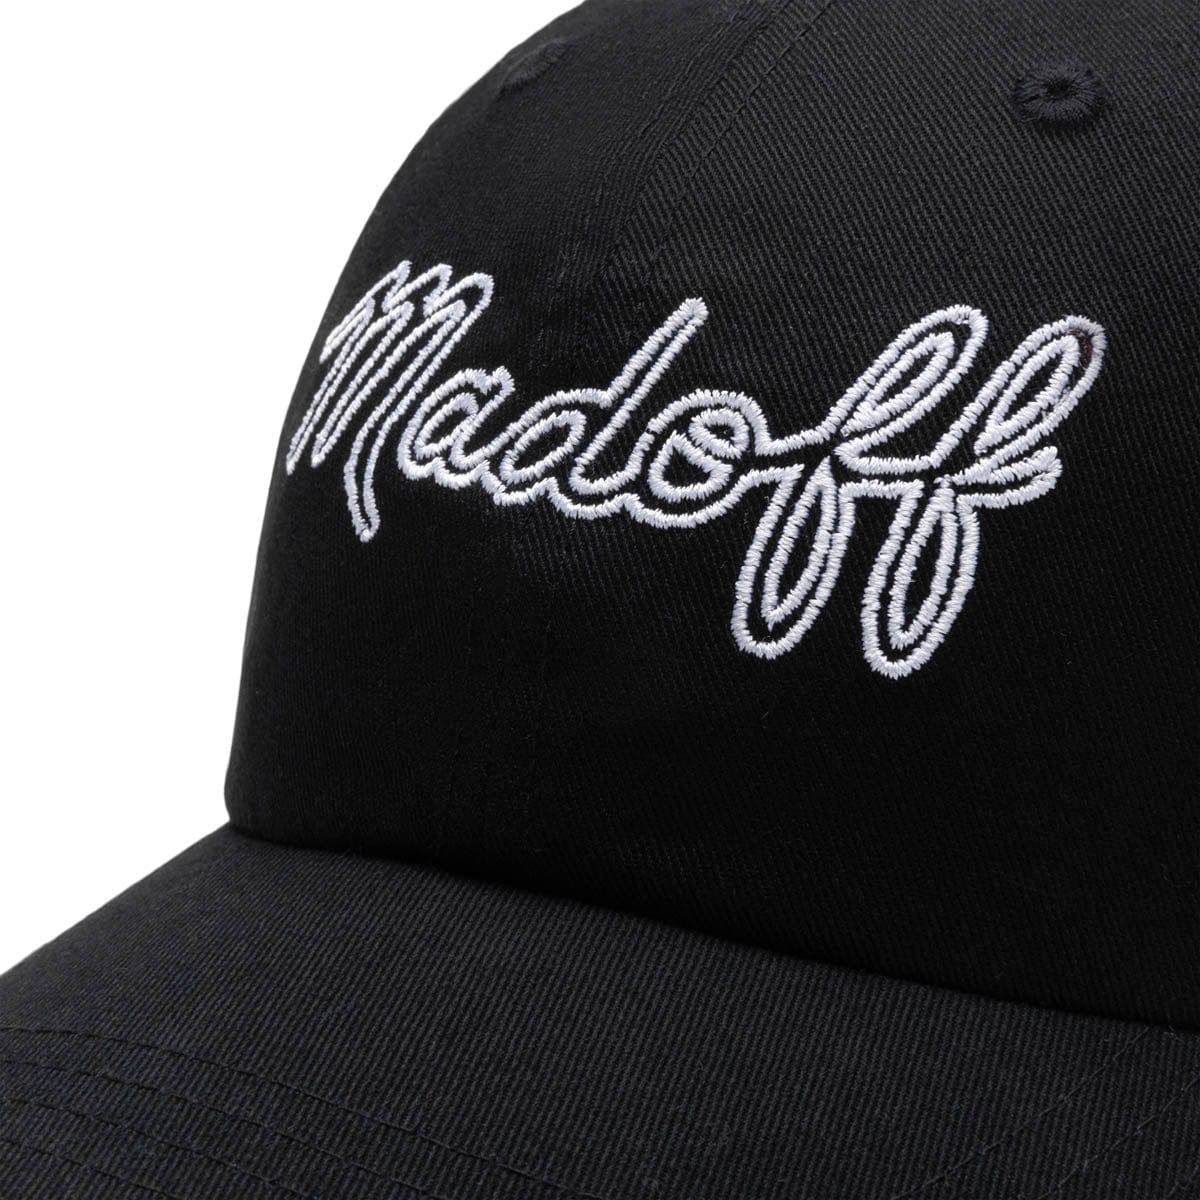 Dutch Tulip Financial Headwear BLACK / O/S MADOFF 6-PANEL HAT